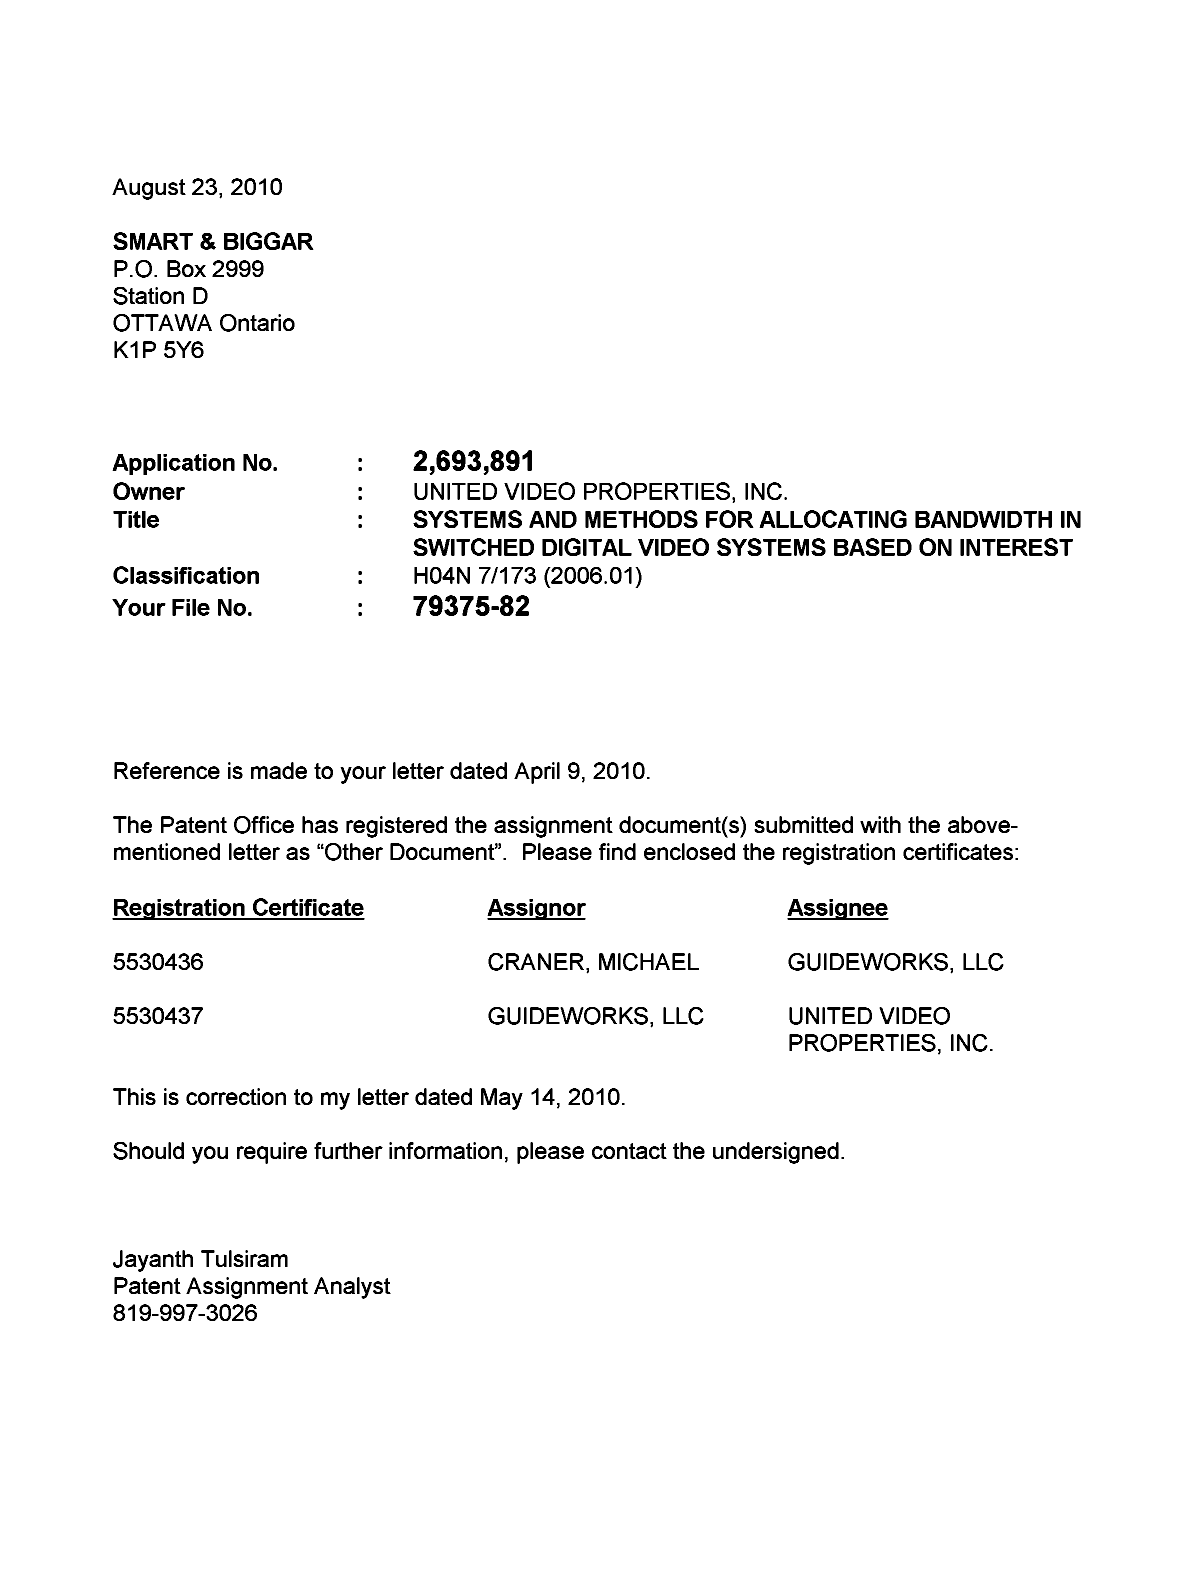 Canadian Patent Document 2693891. Correspondence 20100823. Image 1 of 1